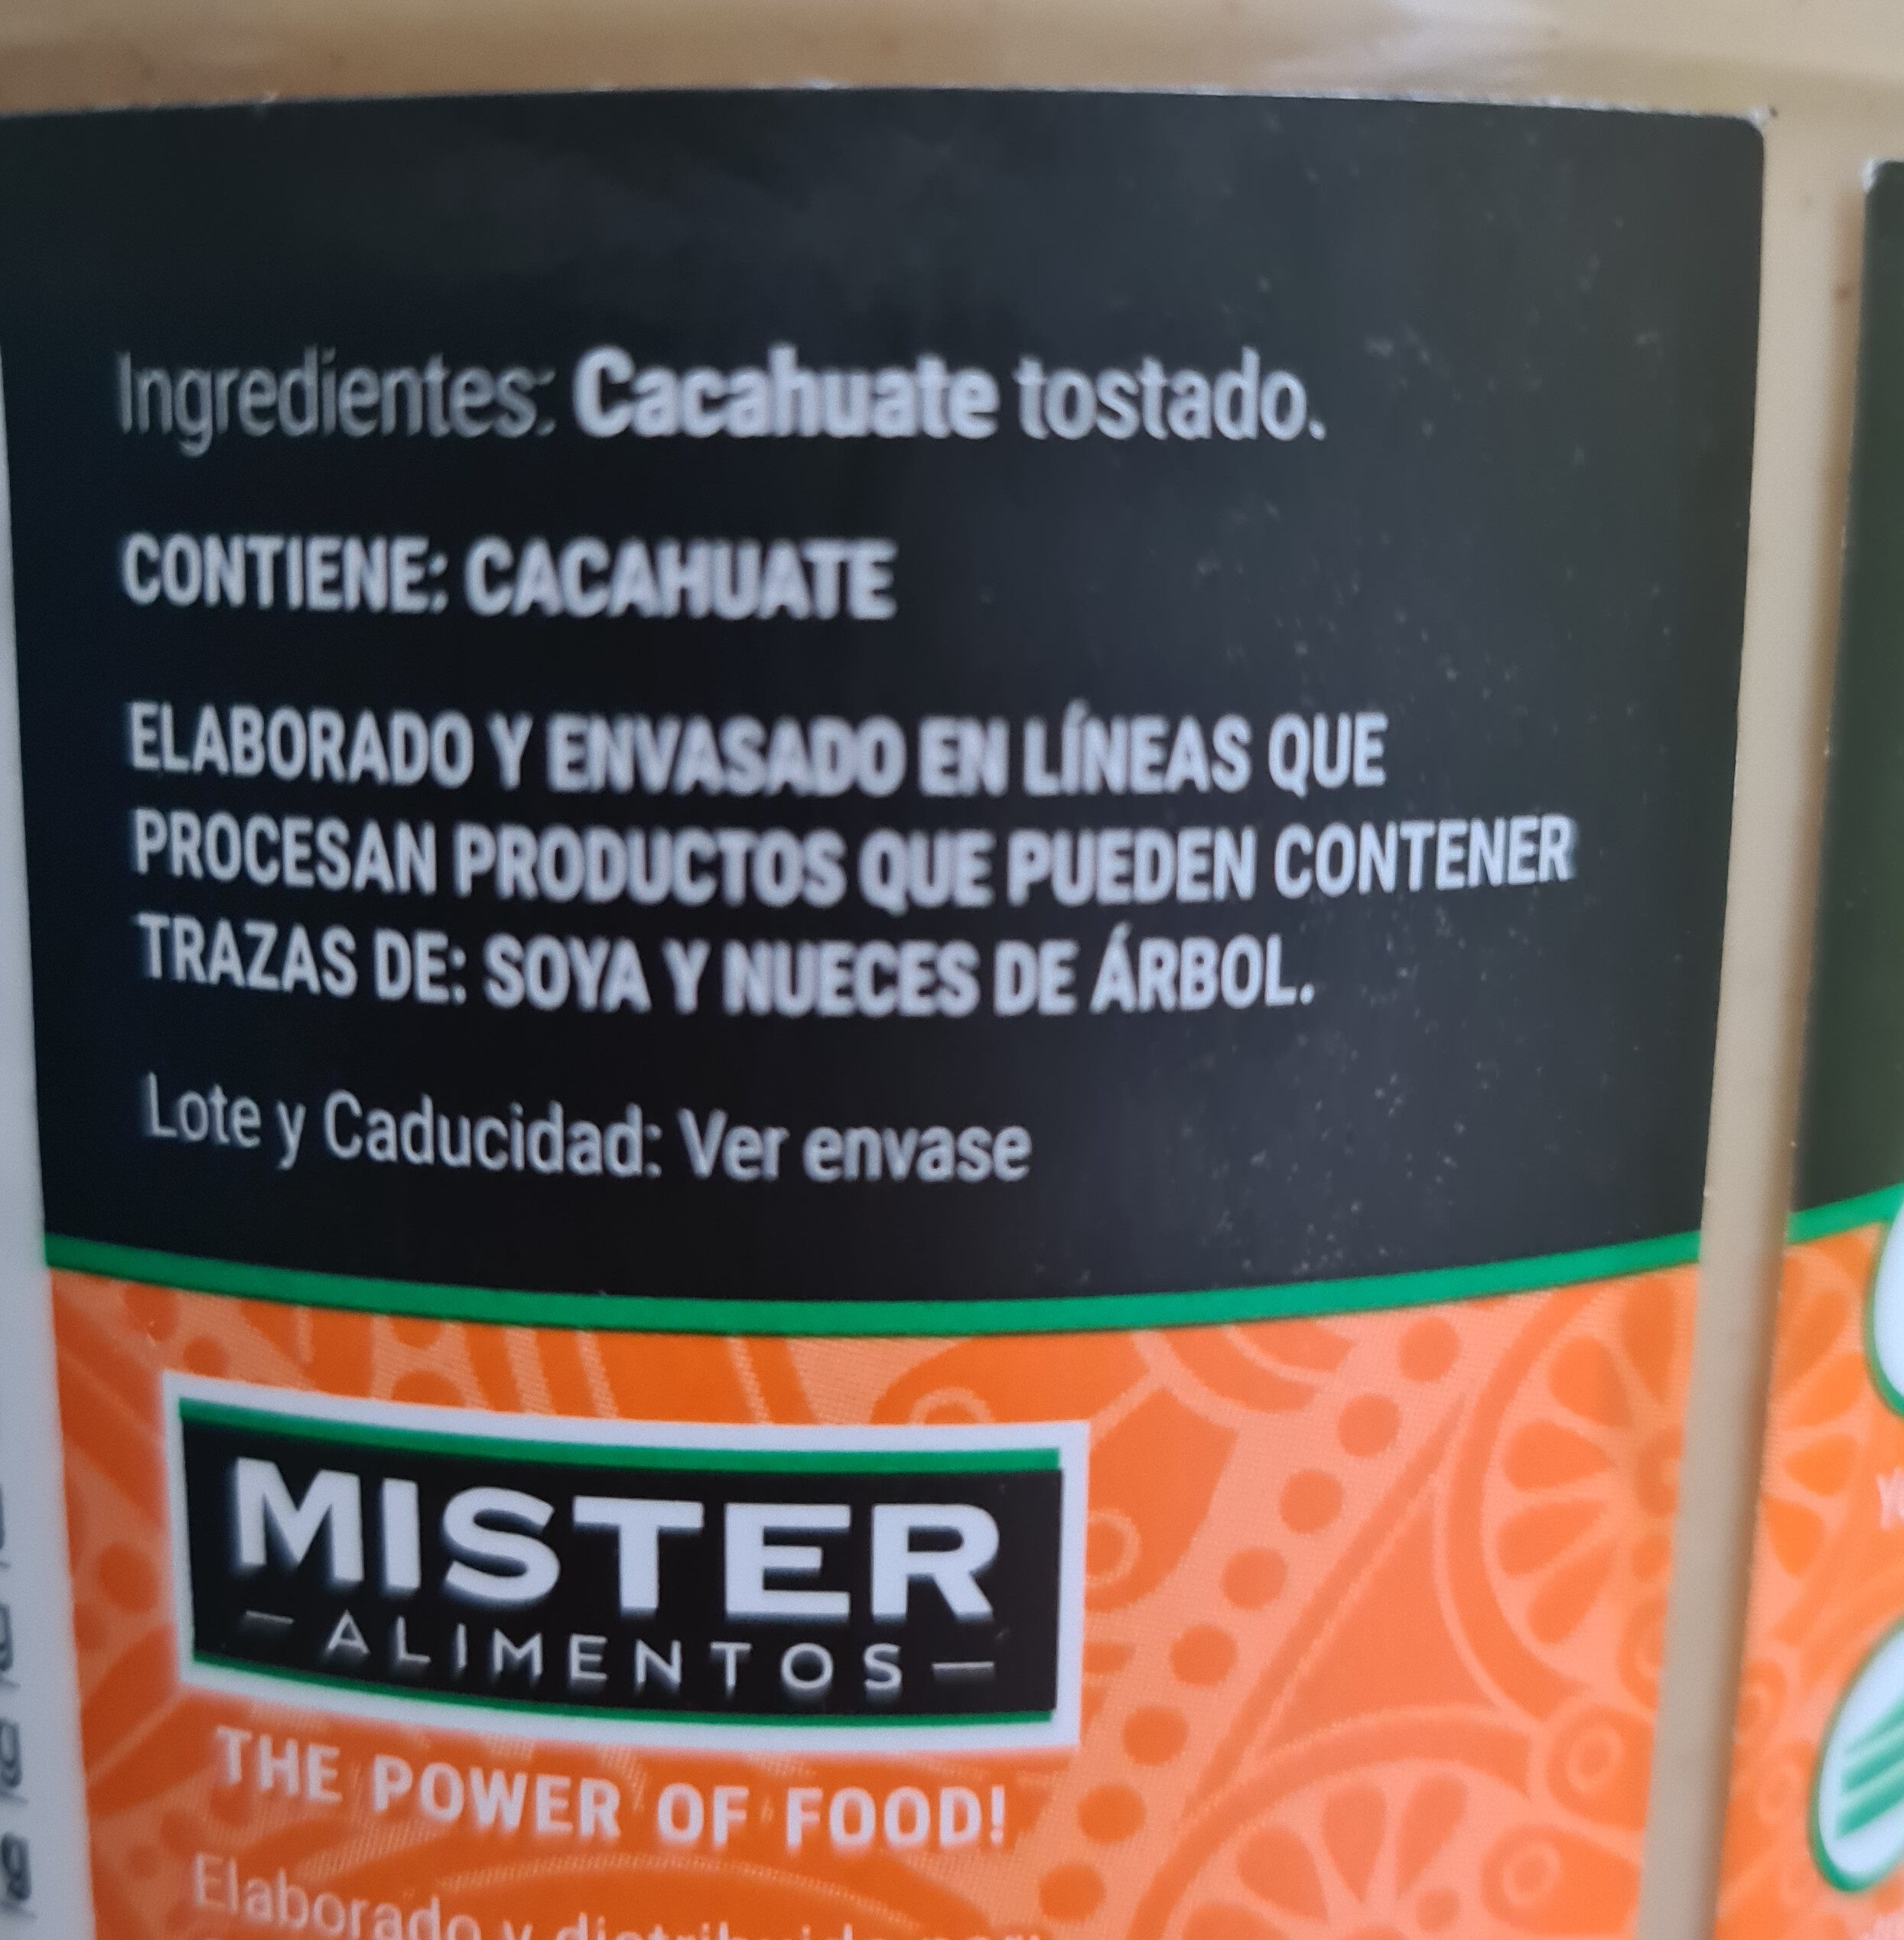 Mister natural untable de cacahuate - Ingredients - es